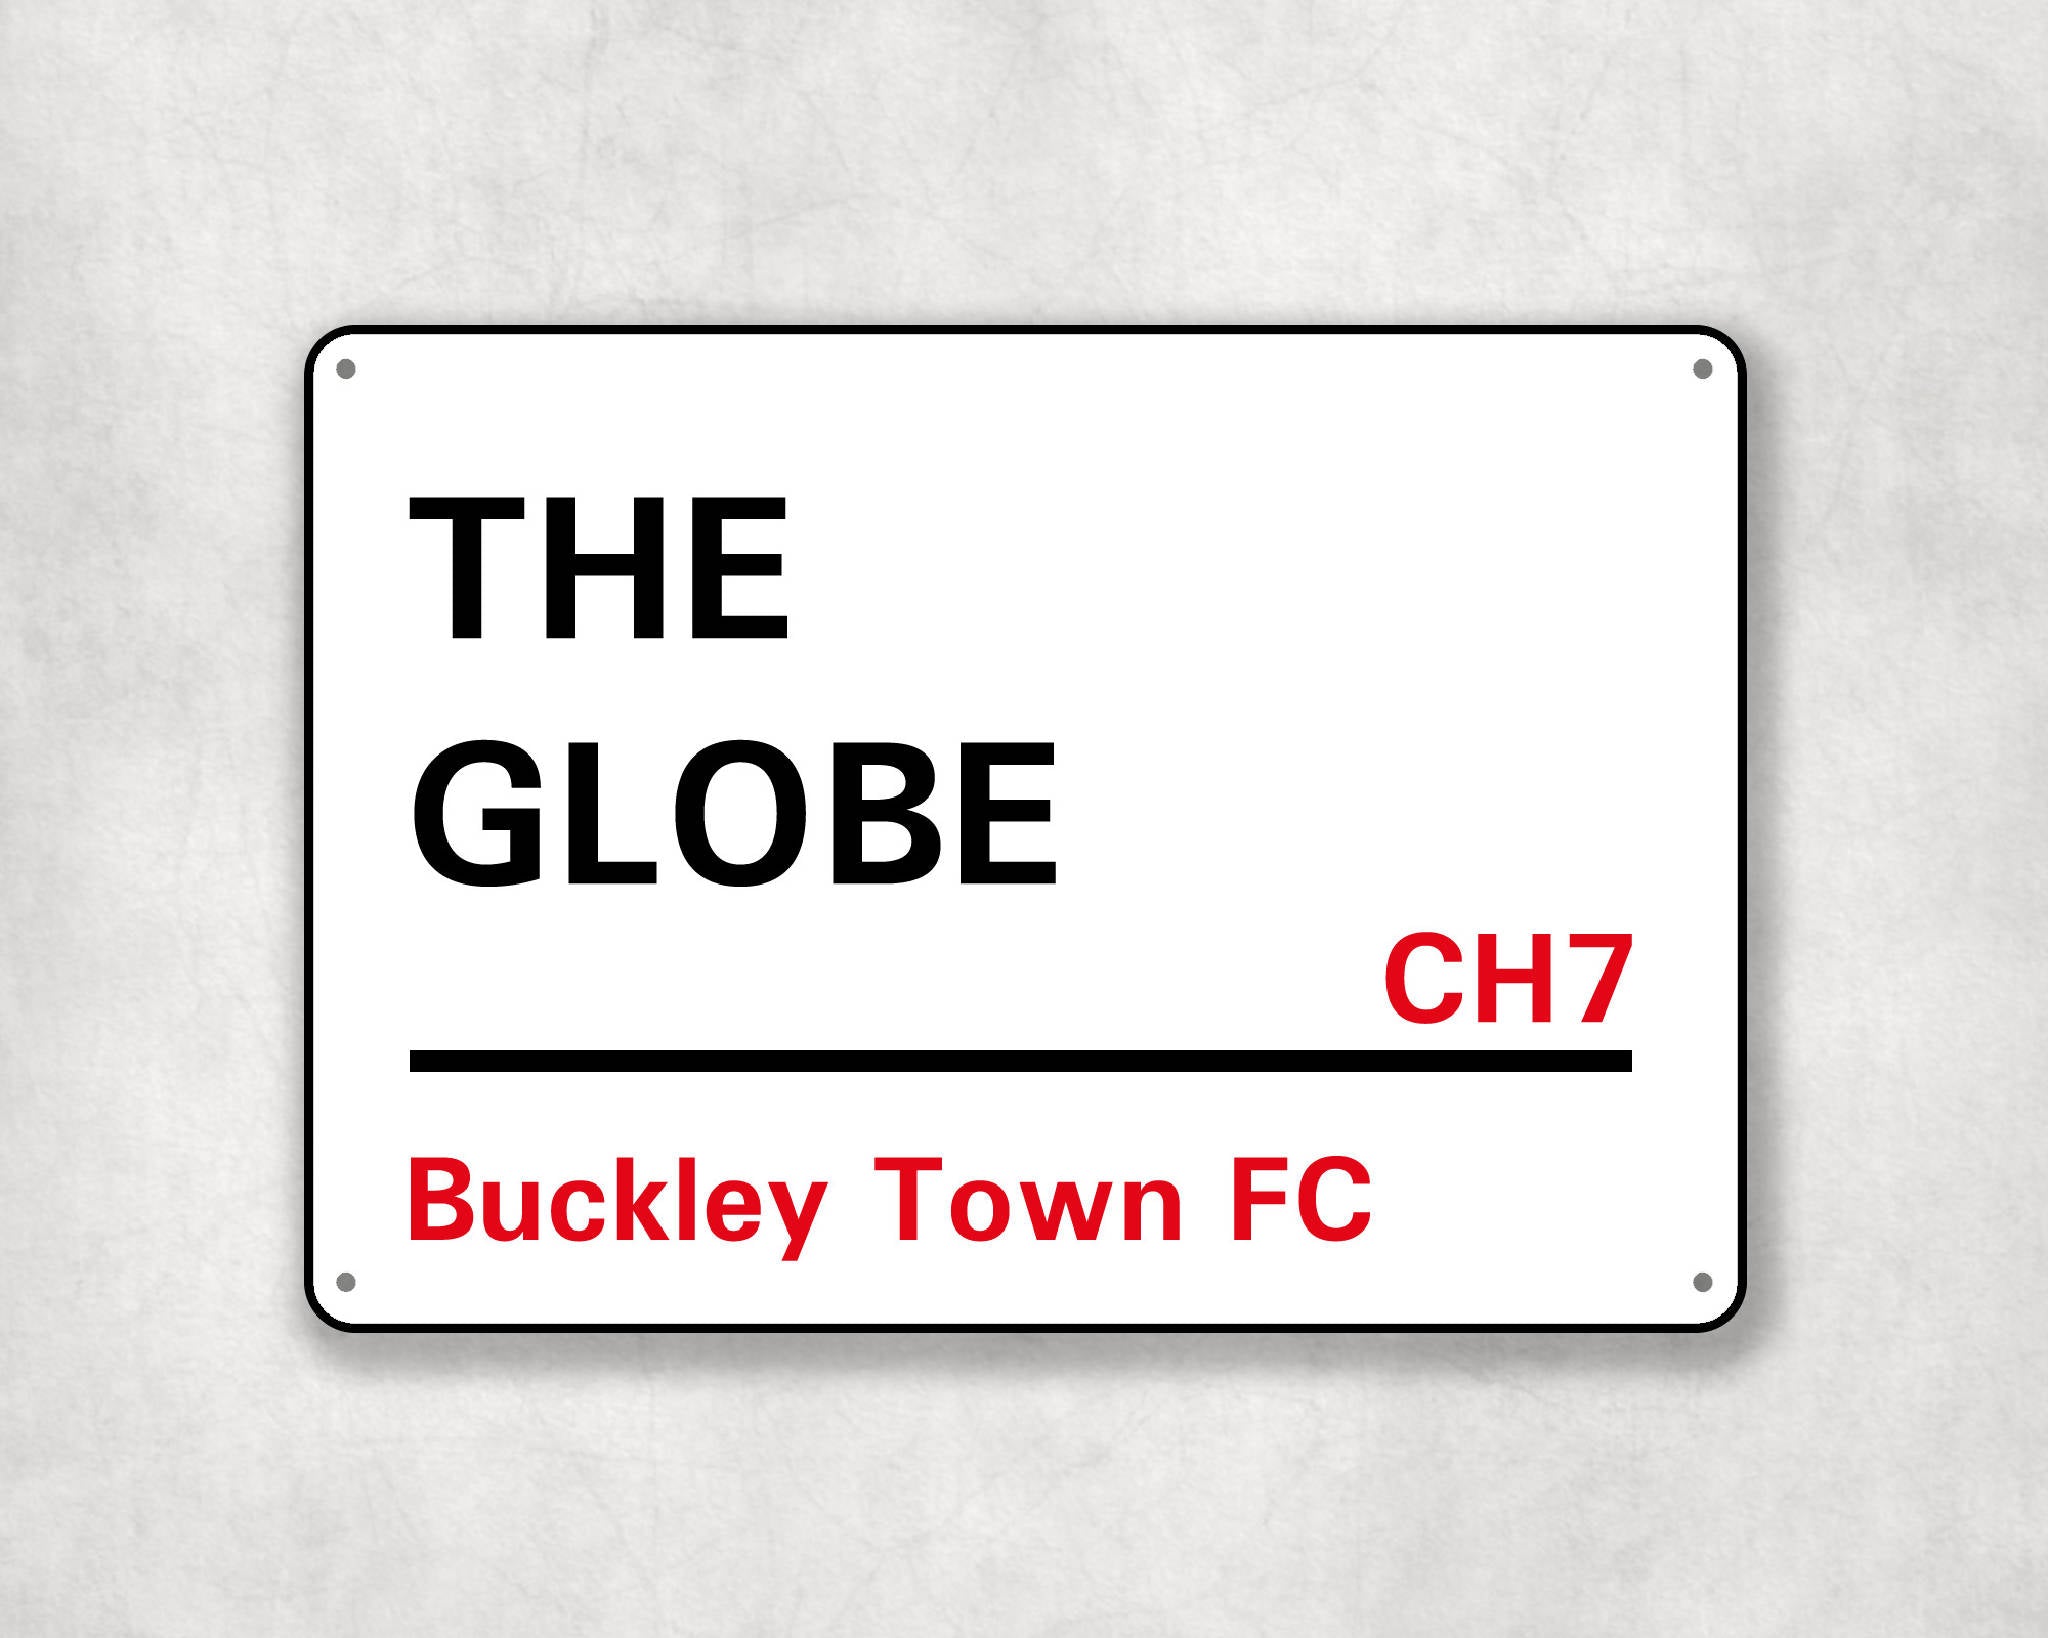 The Globe - Buckley Town FC aluminium printed metal street sign - gift, keepsake, football gift